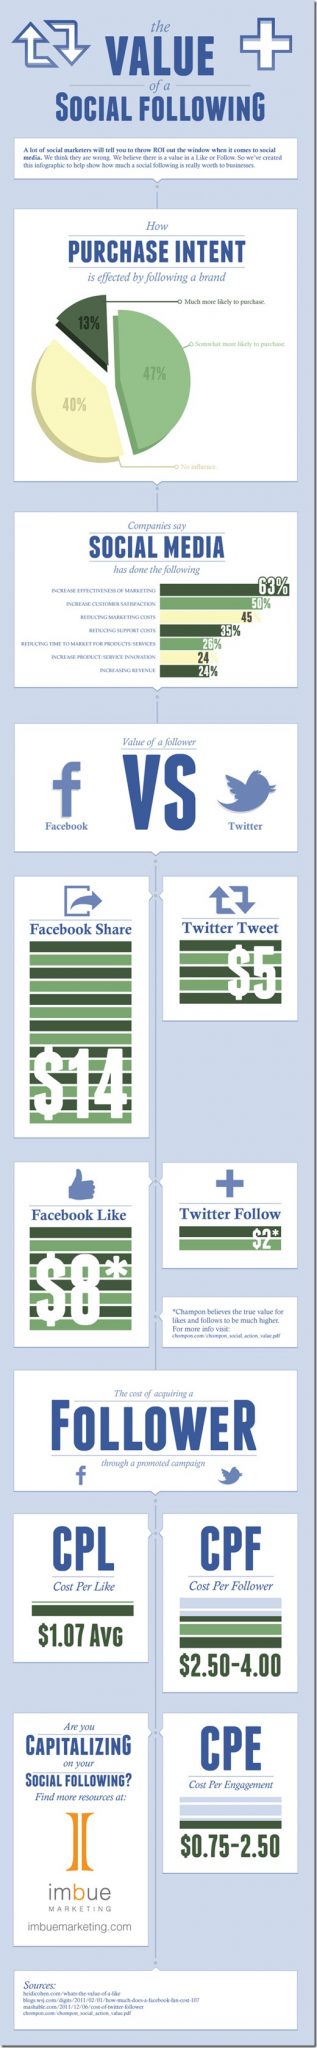 337984-social-media-value-infographic